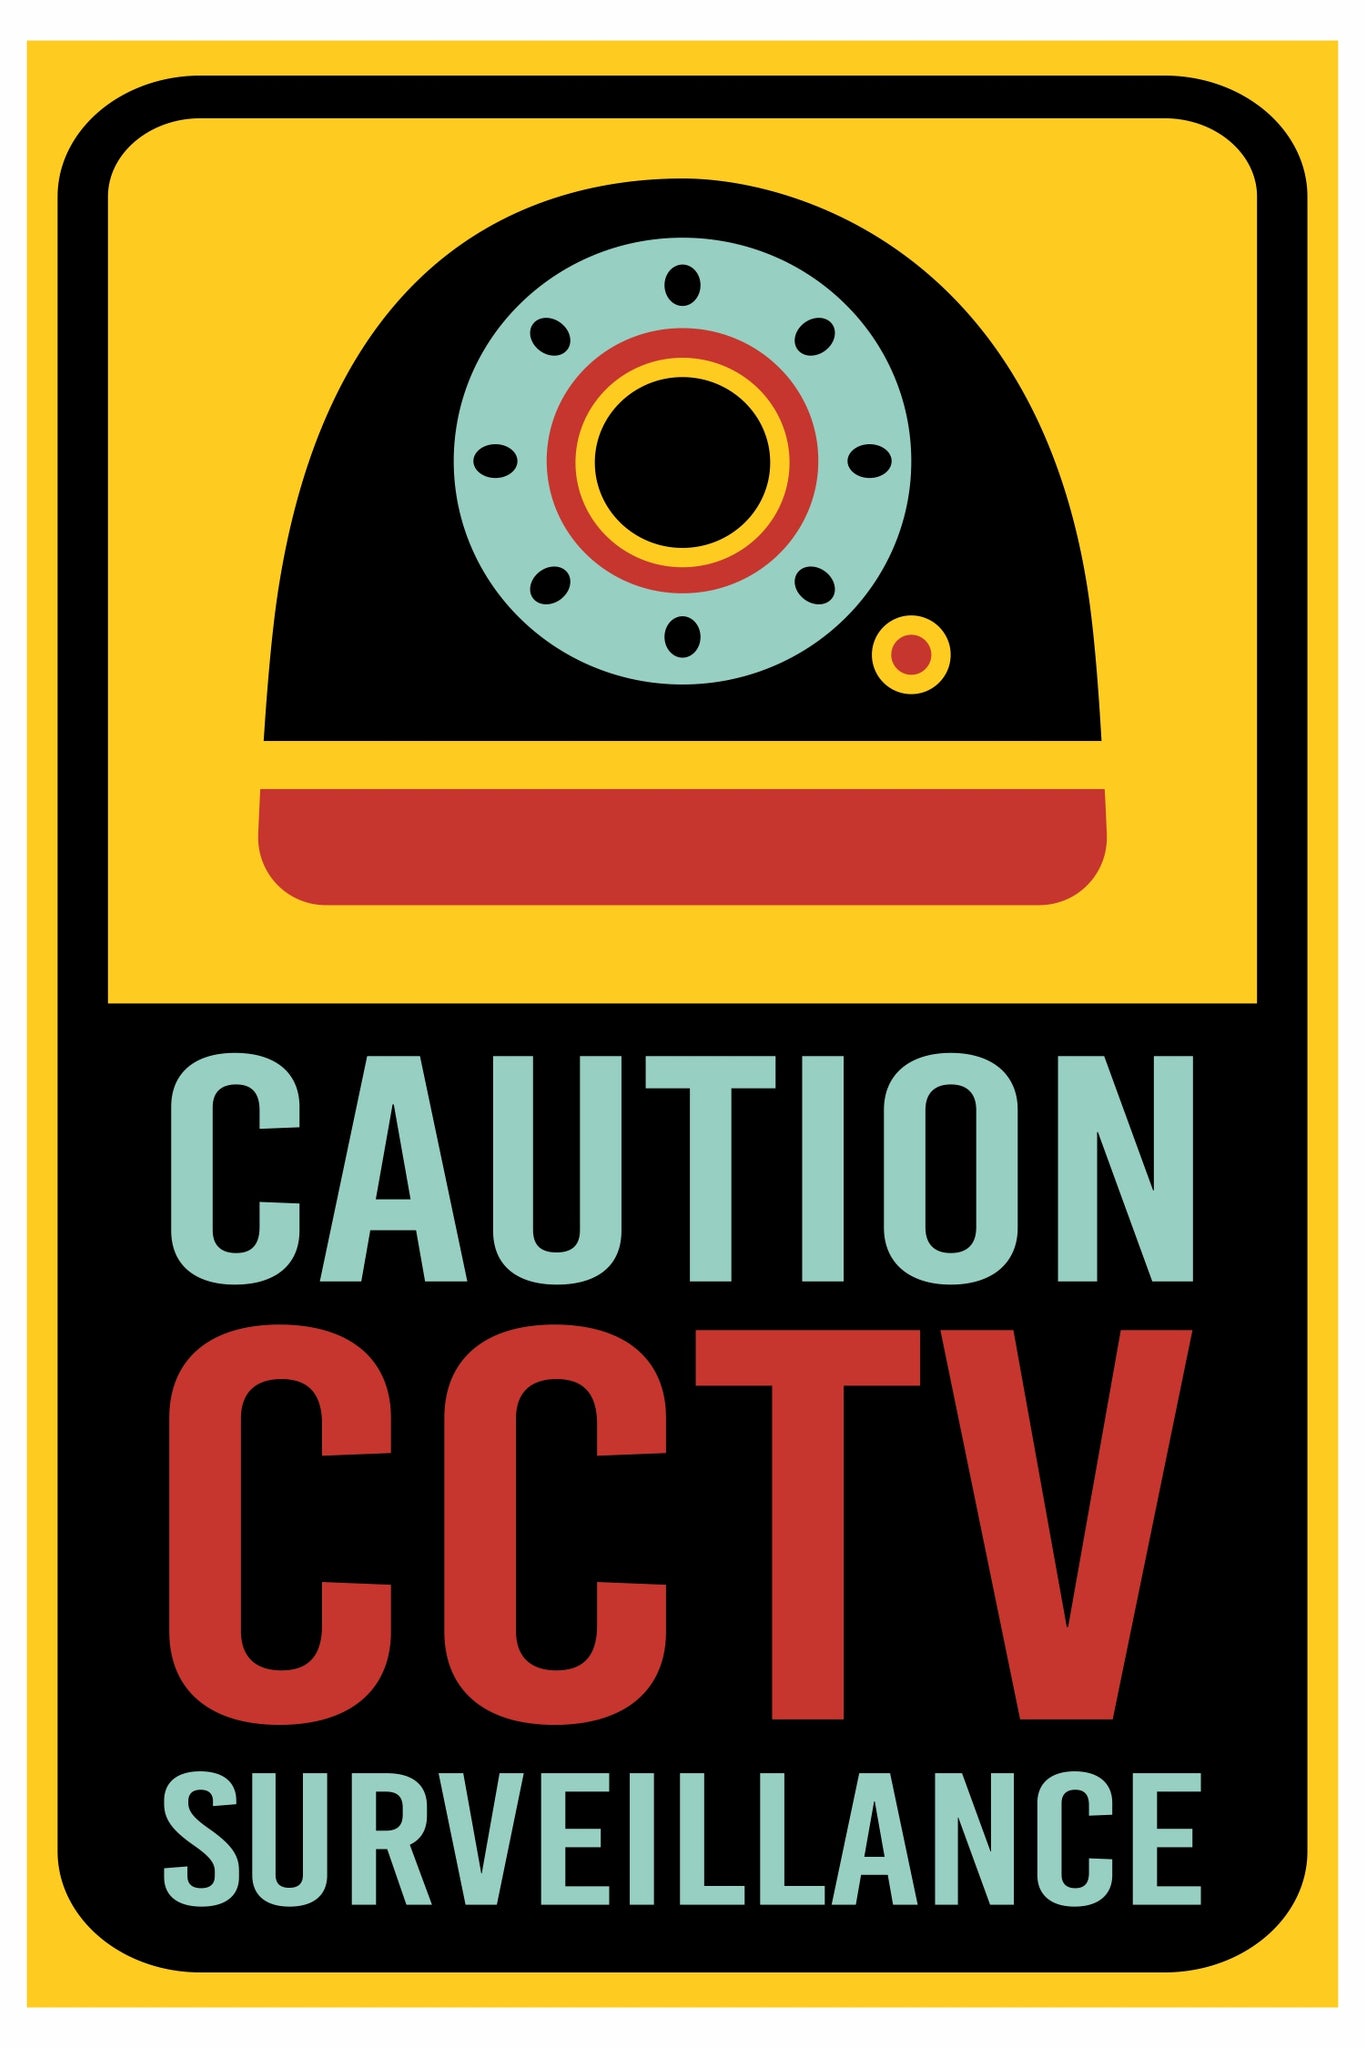 CCTV Safety Warning Sticker